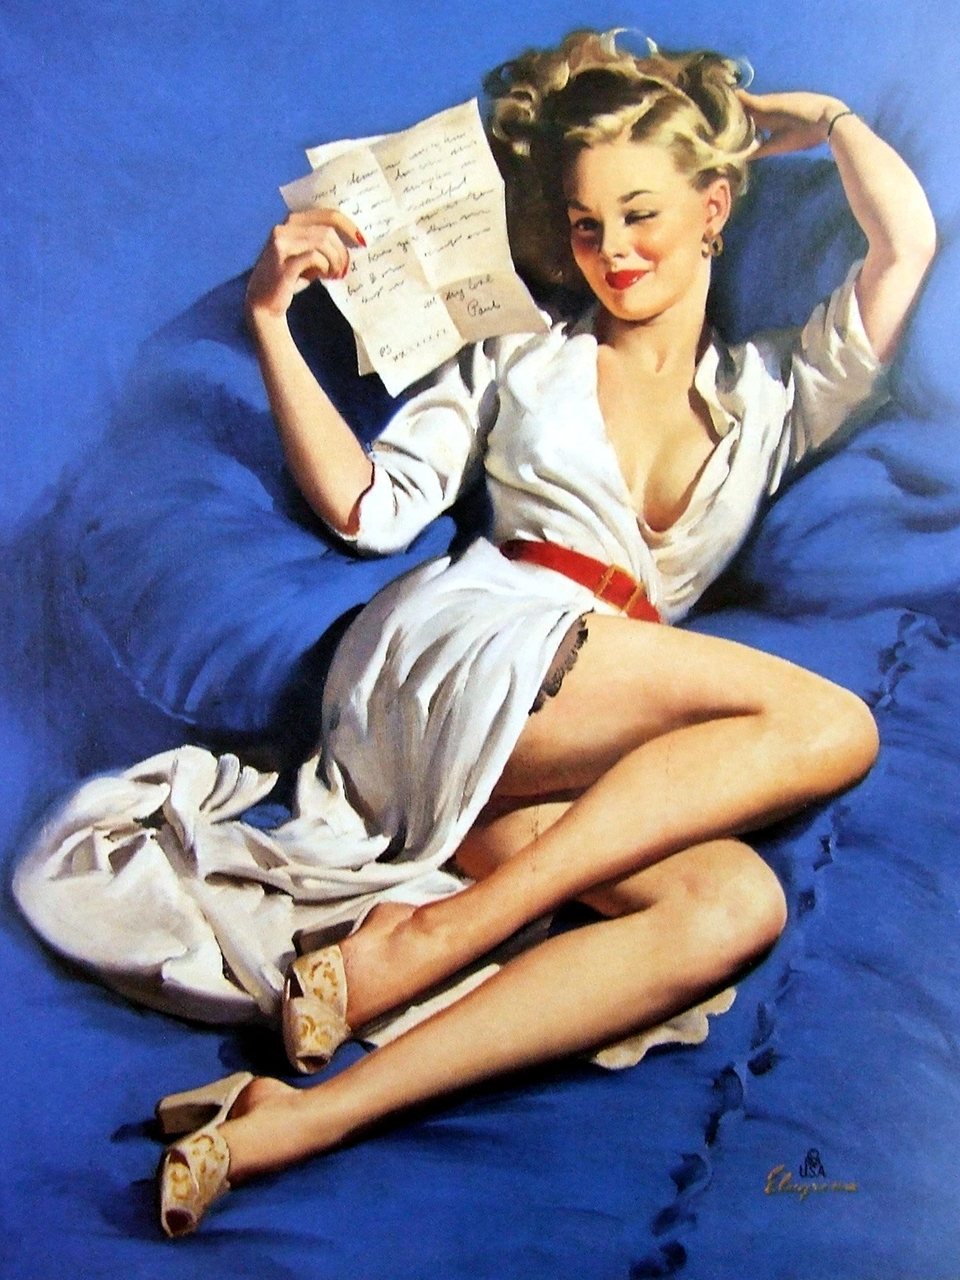 Постер (плакат) Джил Элвгрен: Девушка на голубых простынях
